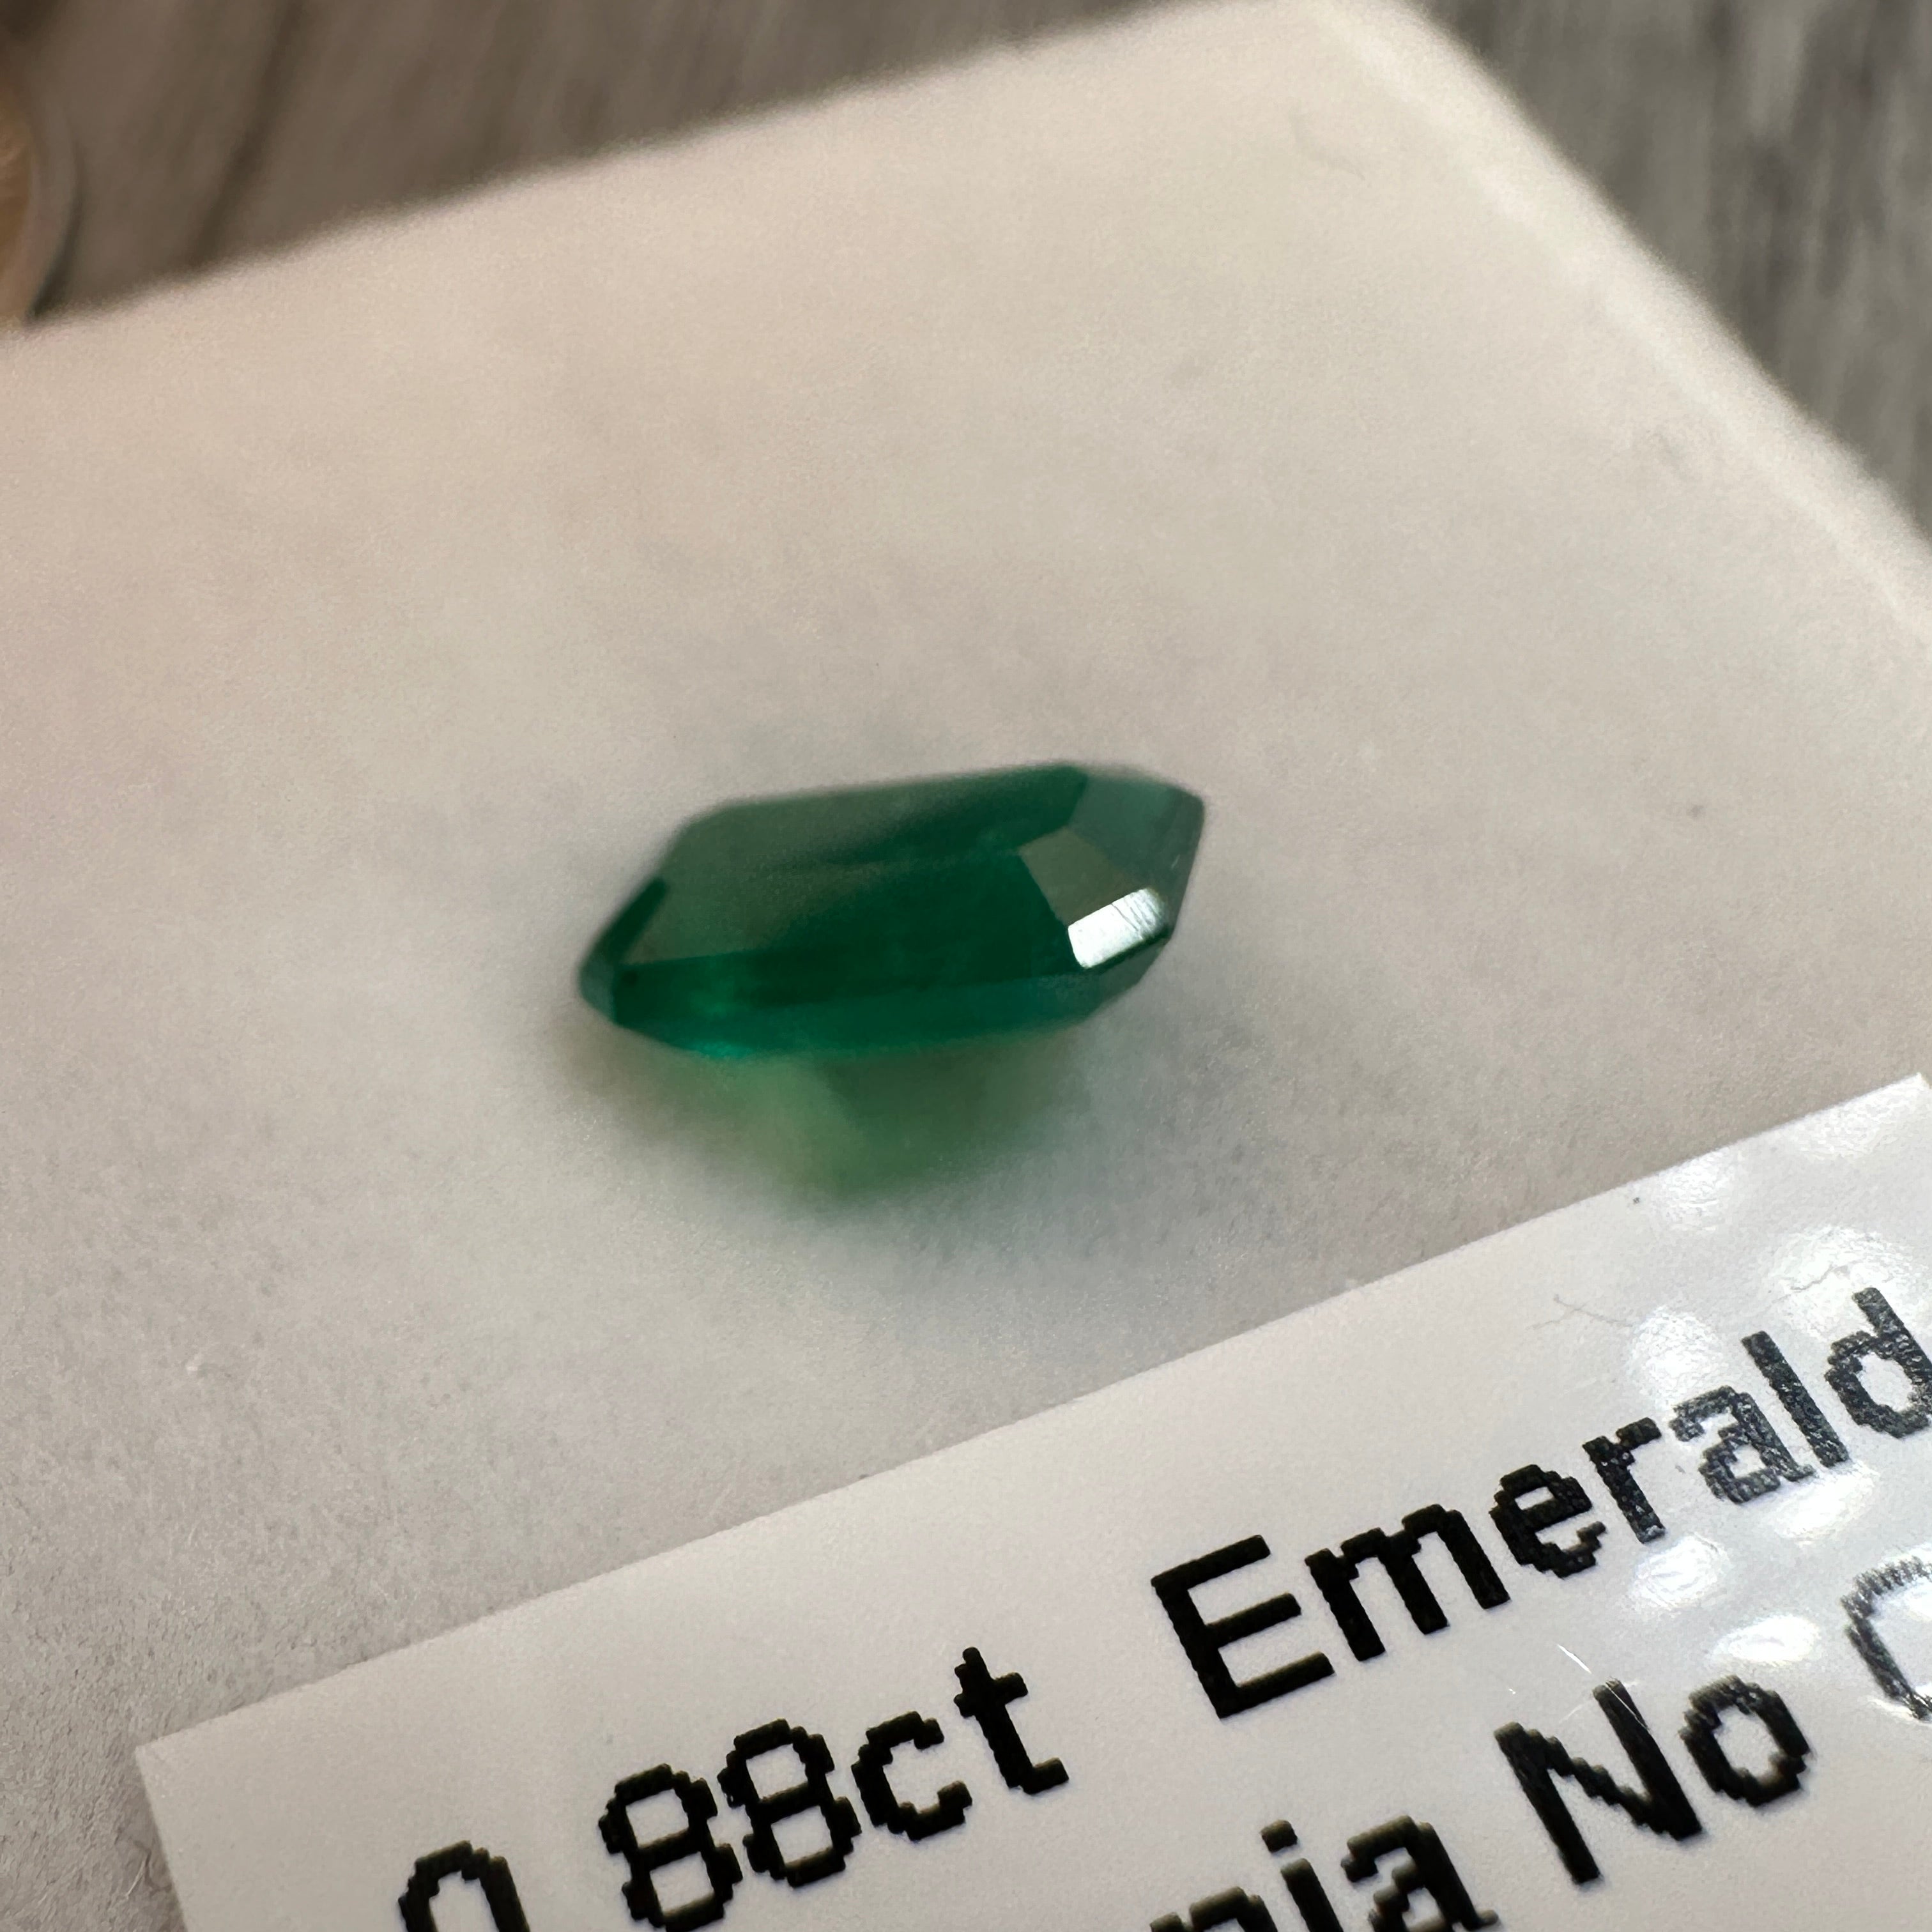 0.88ct Emerald, Tanzania, No Oil Unheated Untreated